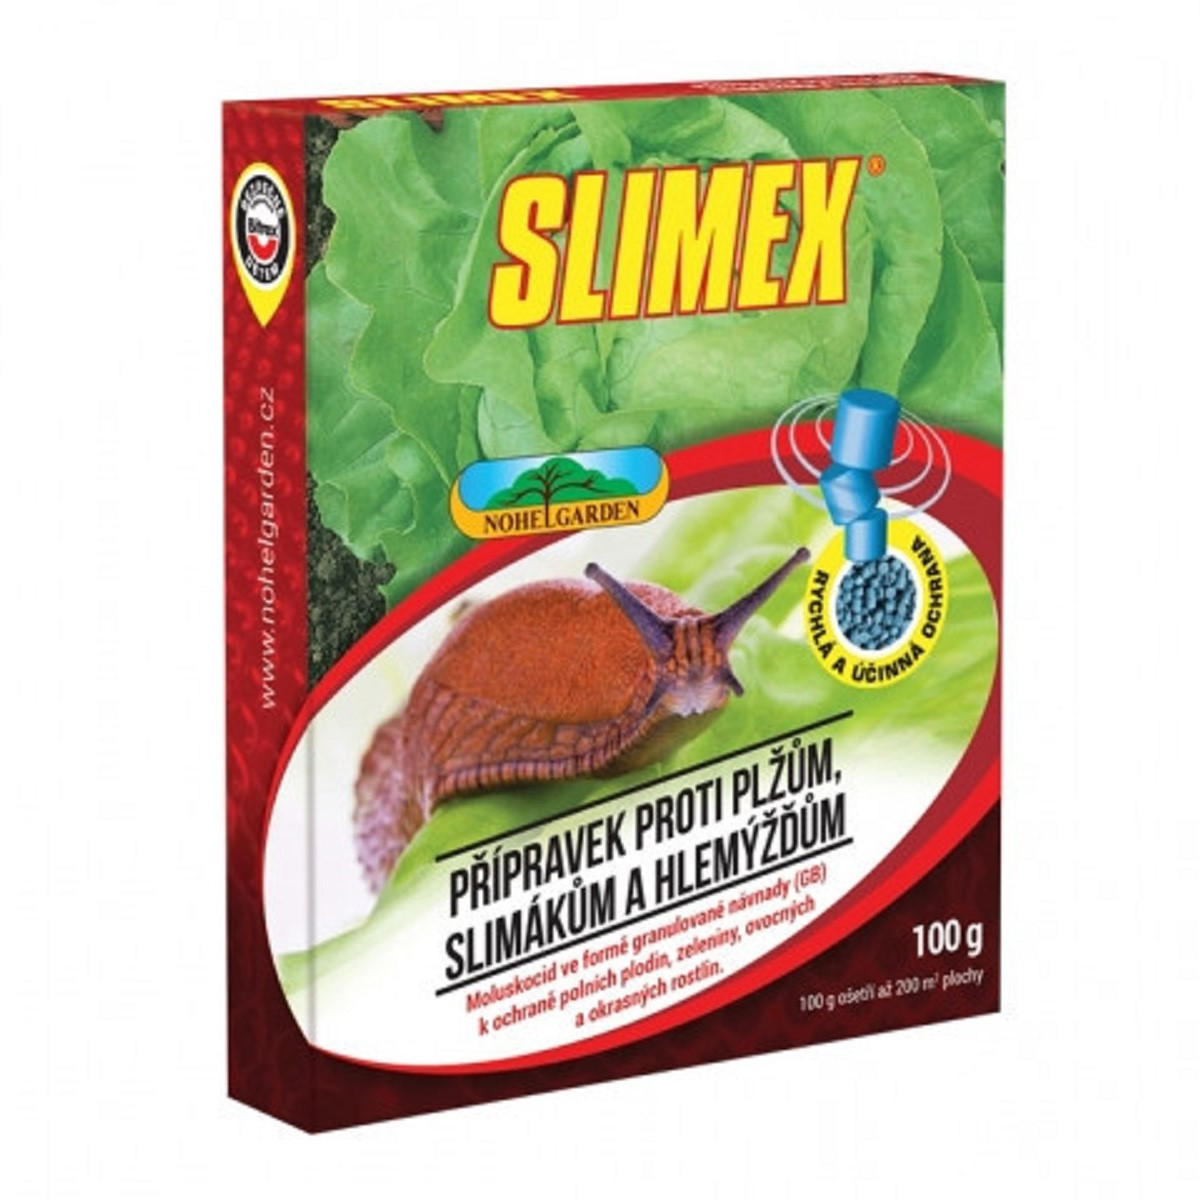 Slimex - Nohel Garden - ochrana proti slimákům - 100 g